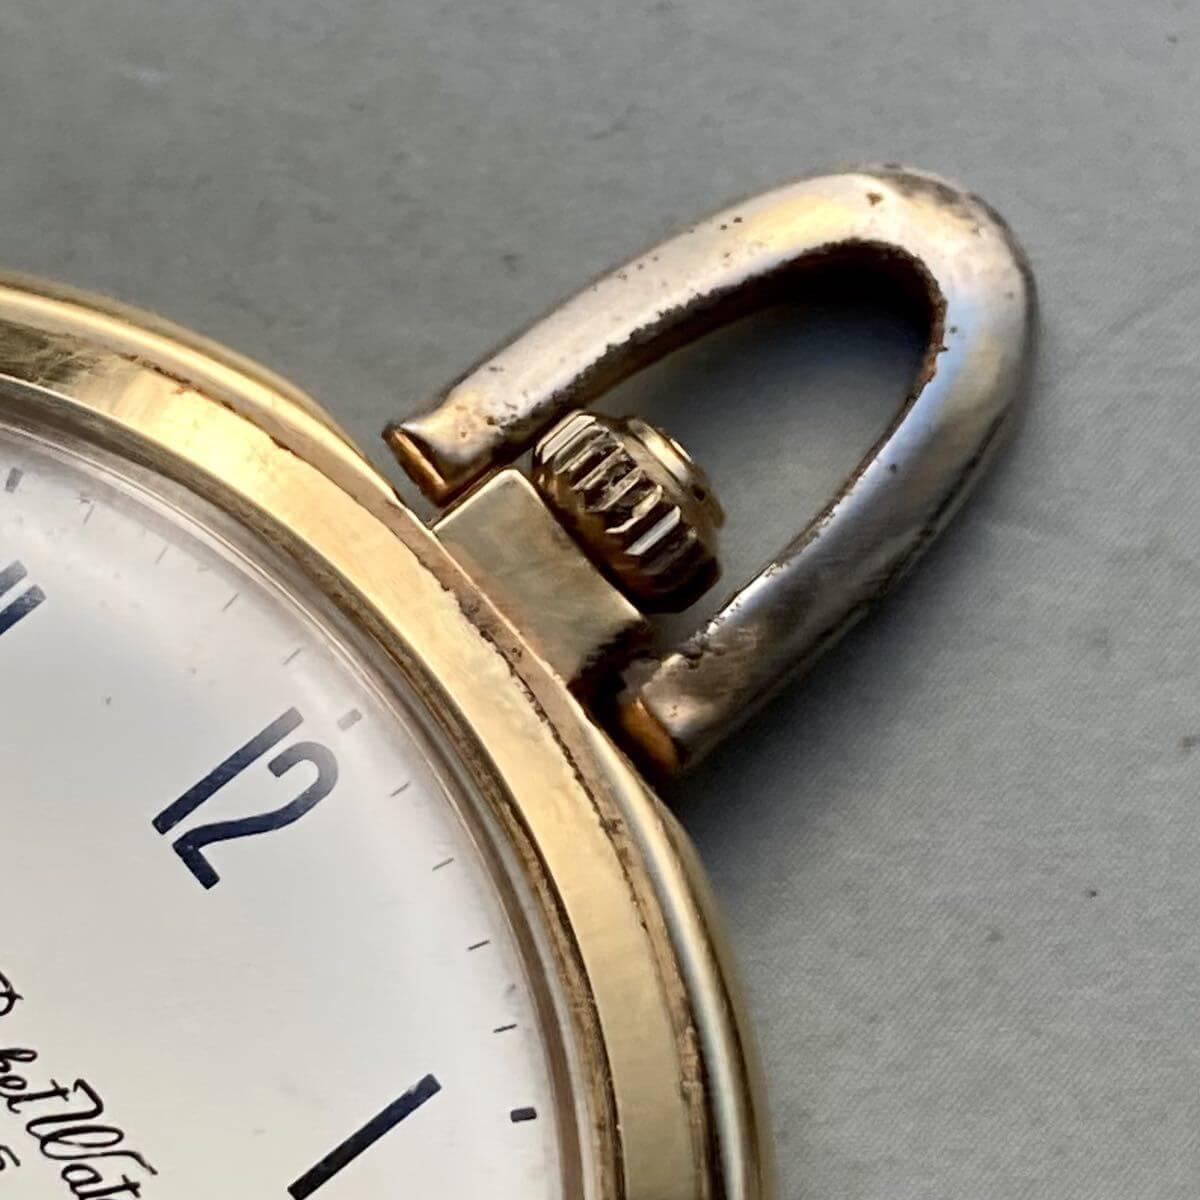 Citizen Pocket Watch Antique Gold 41mm Vintage Open Face - Murphy Johnson Watches Co.